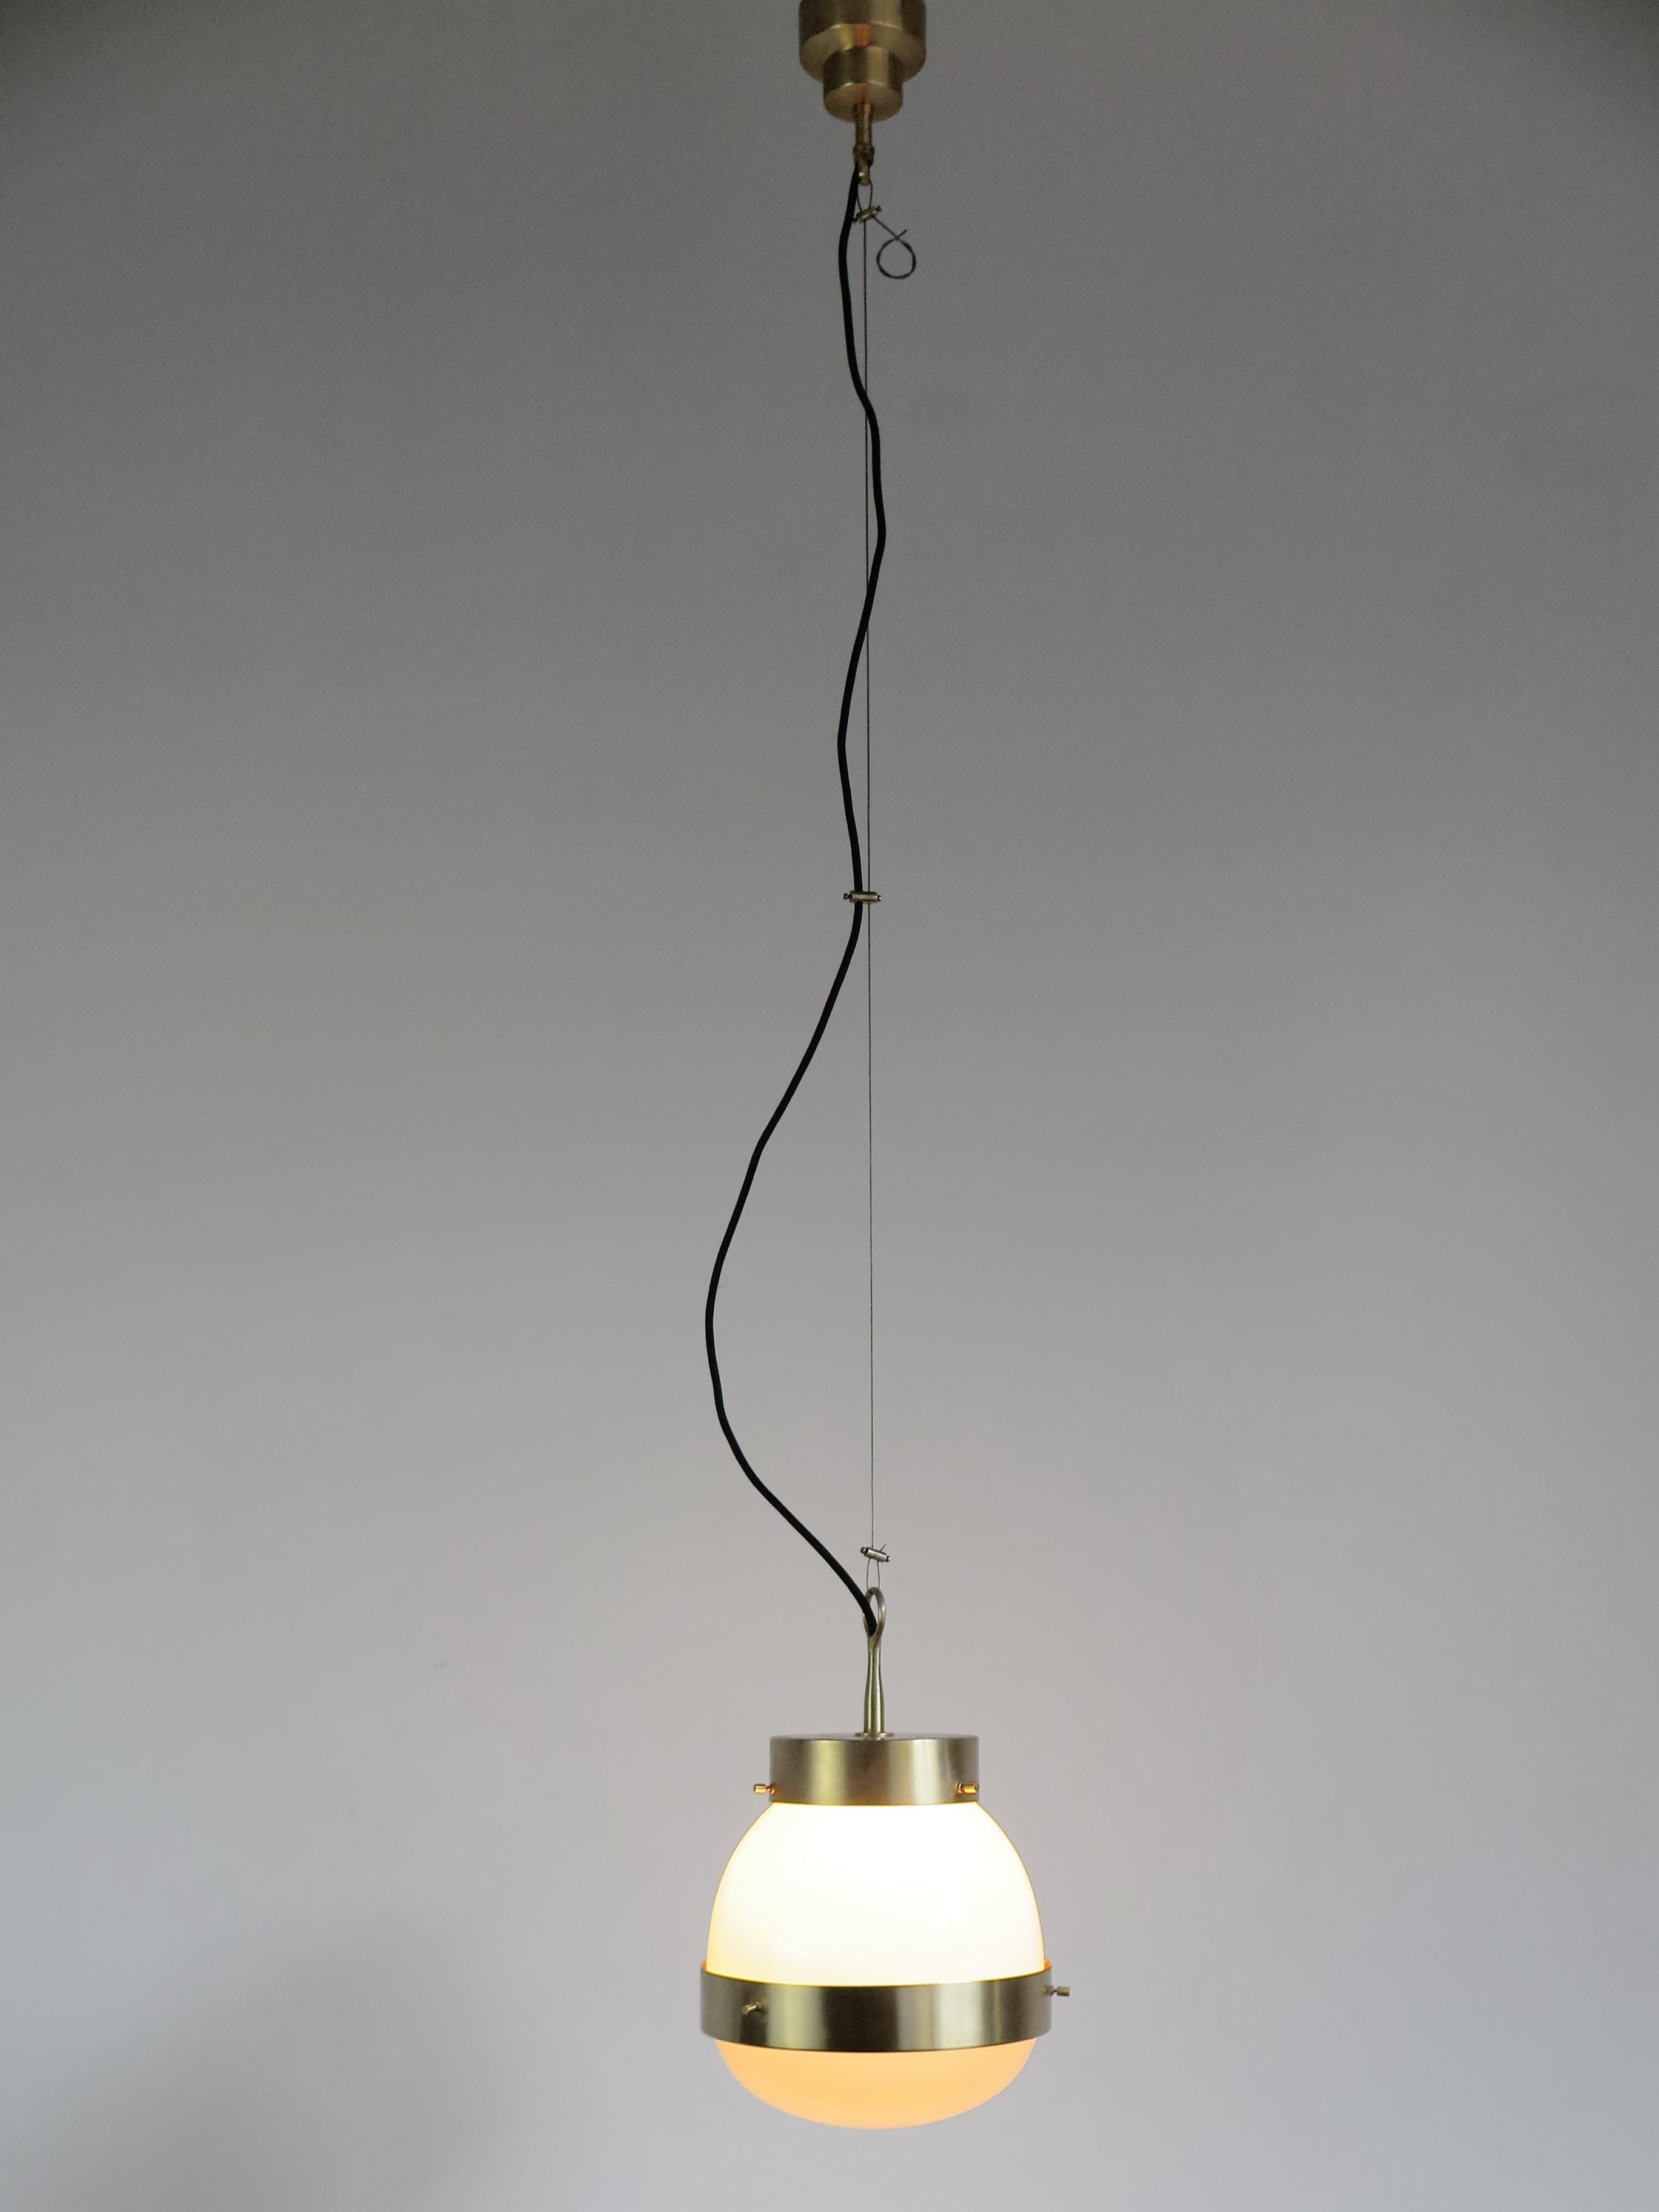 Italian Mid-Century Modern design pendant lamp model 